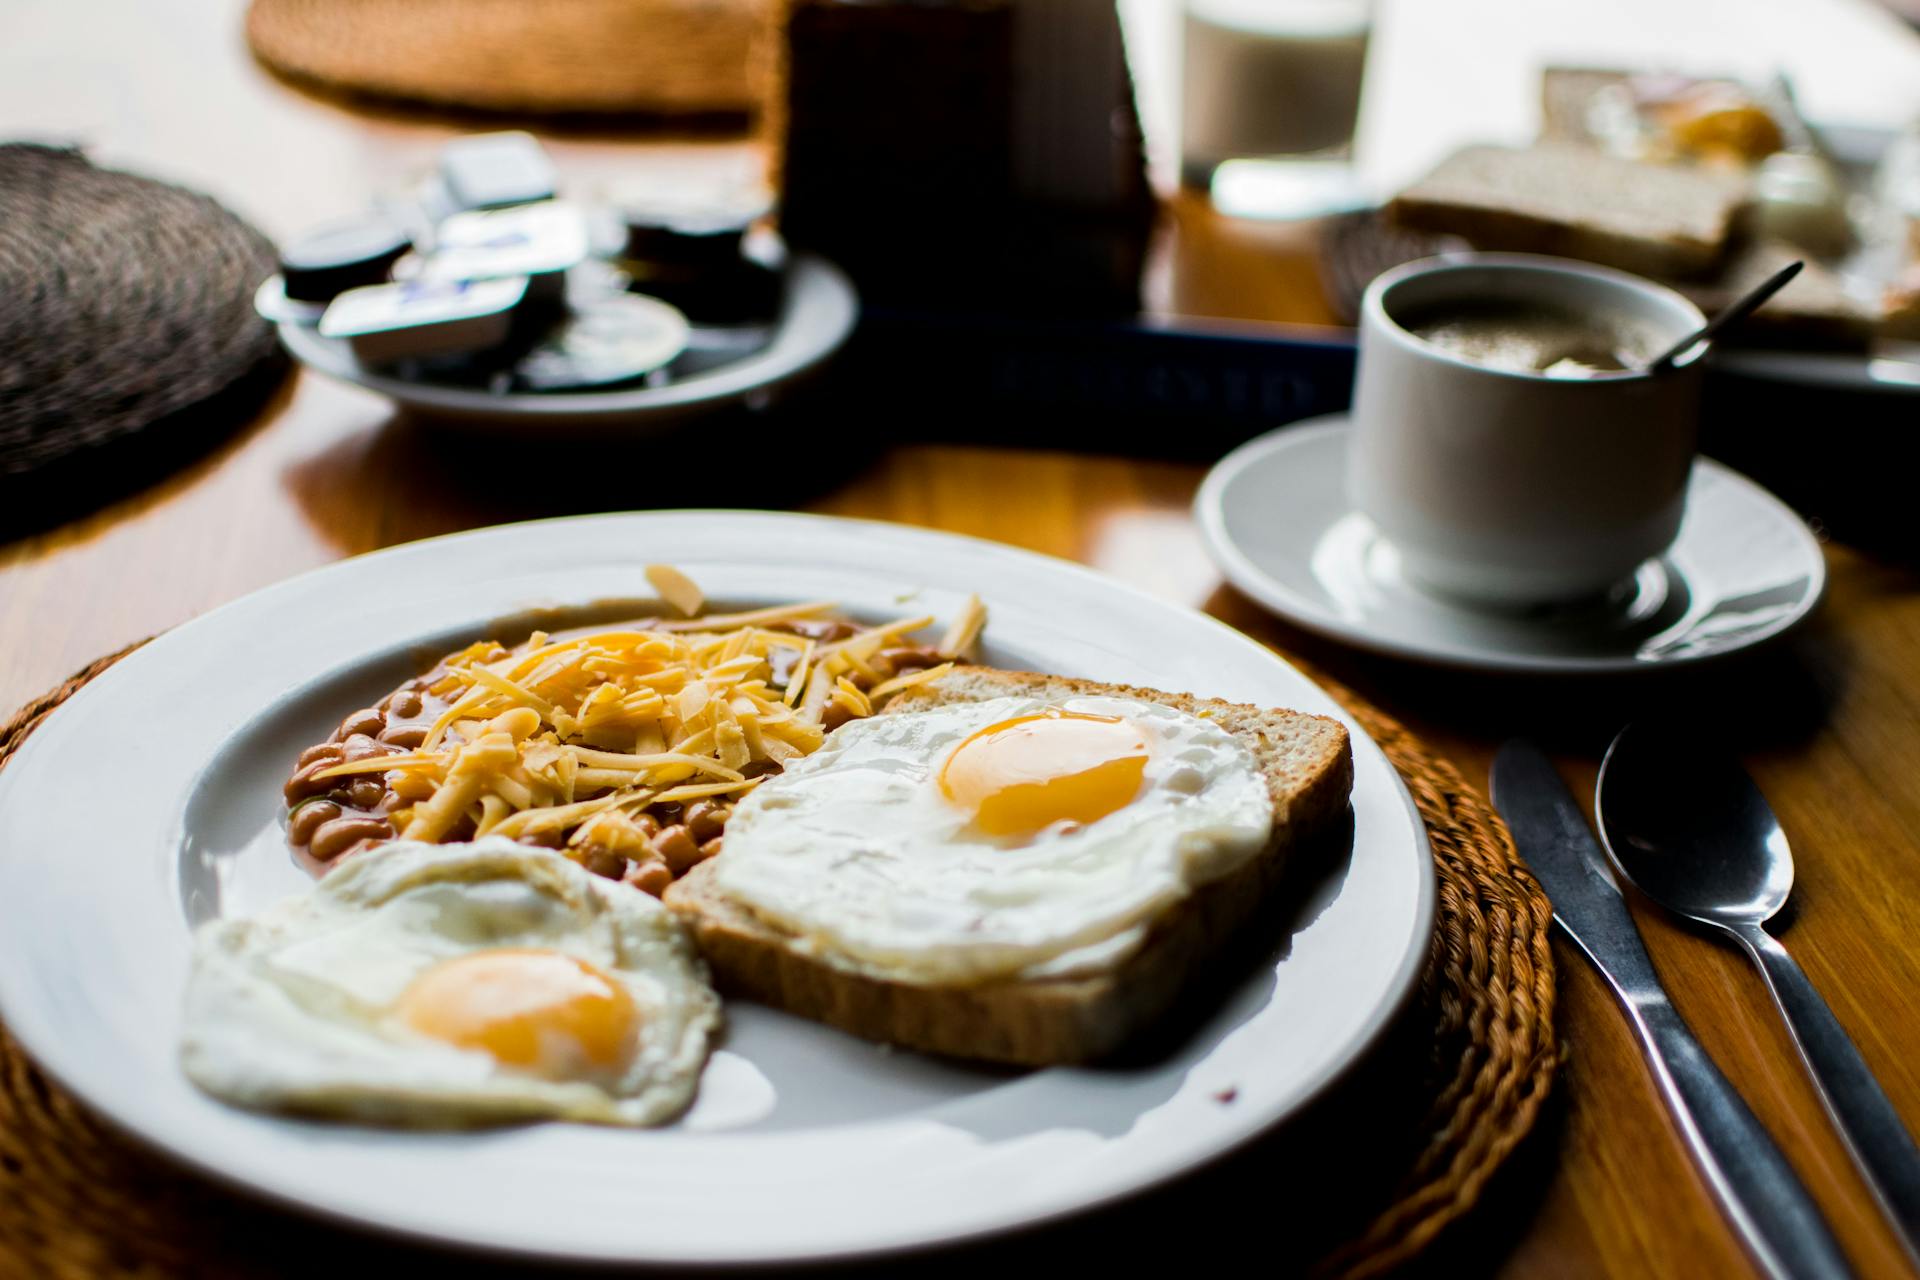 A breakfast plate | Source: Pexels